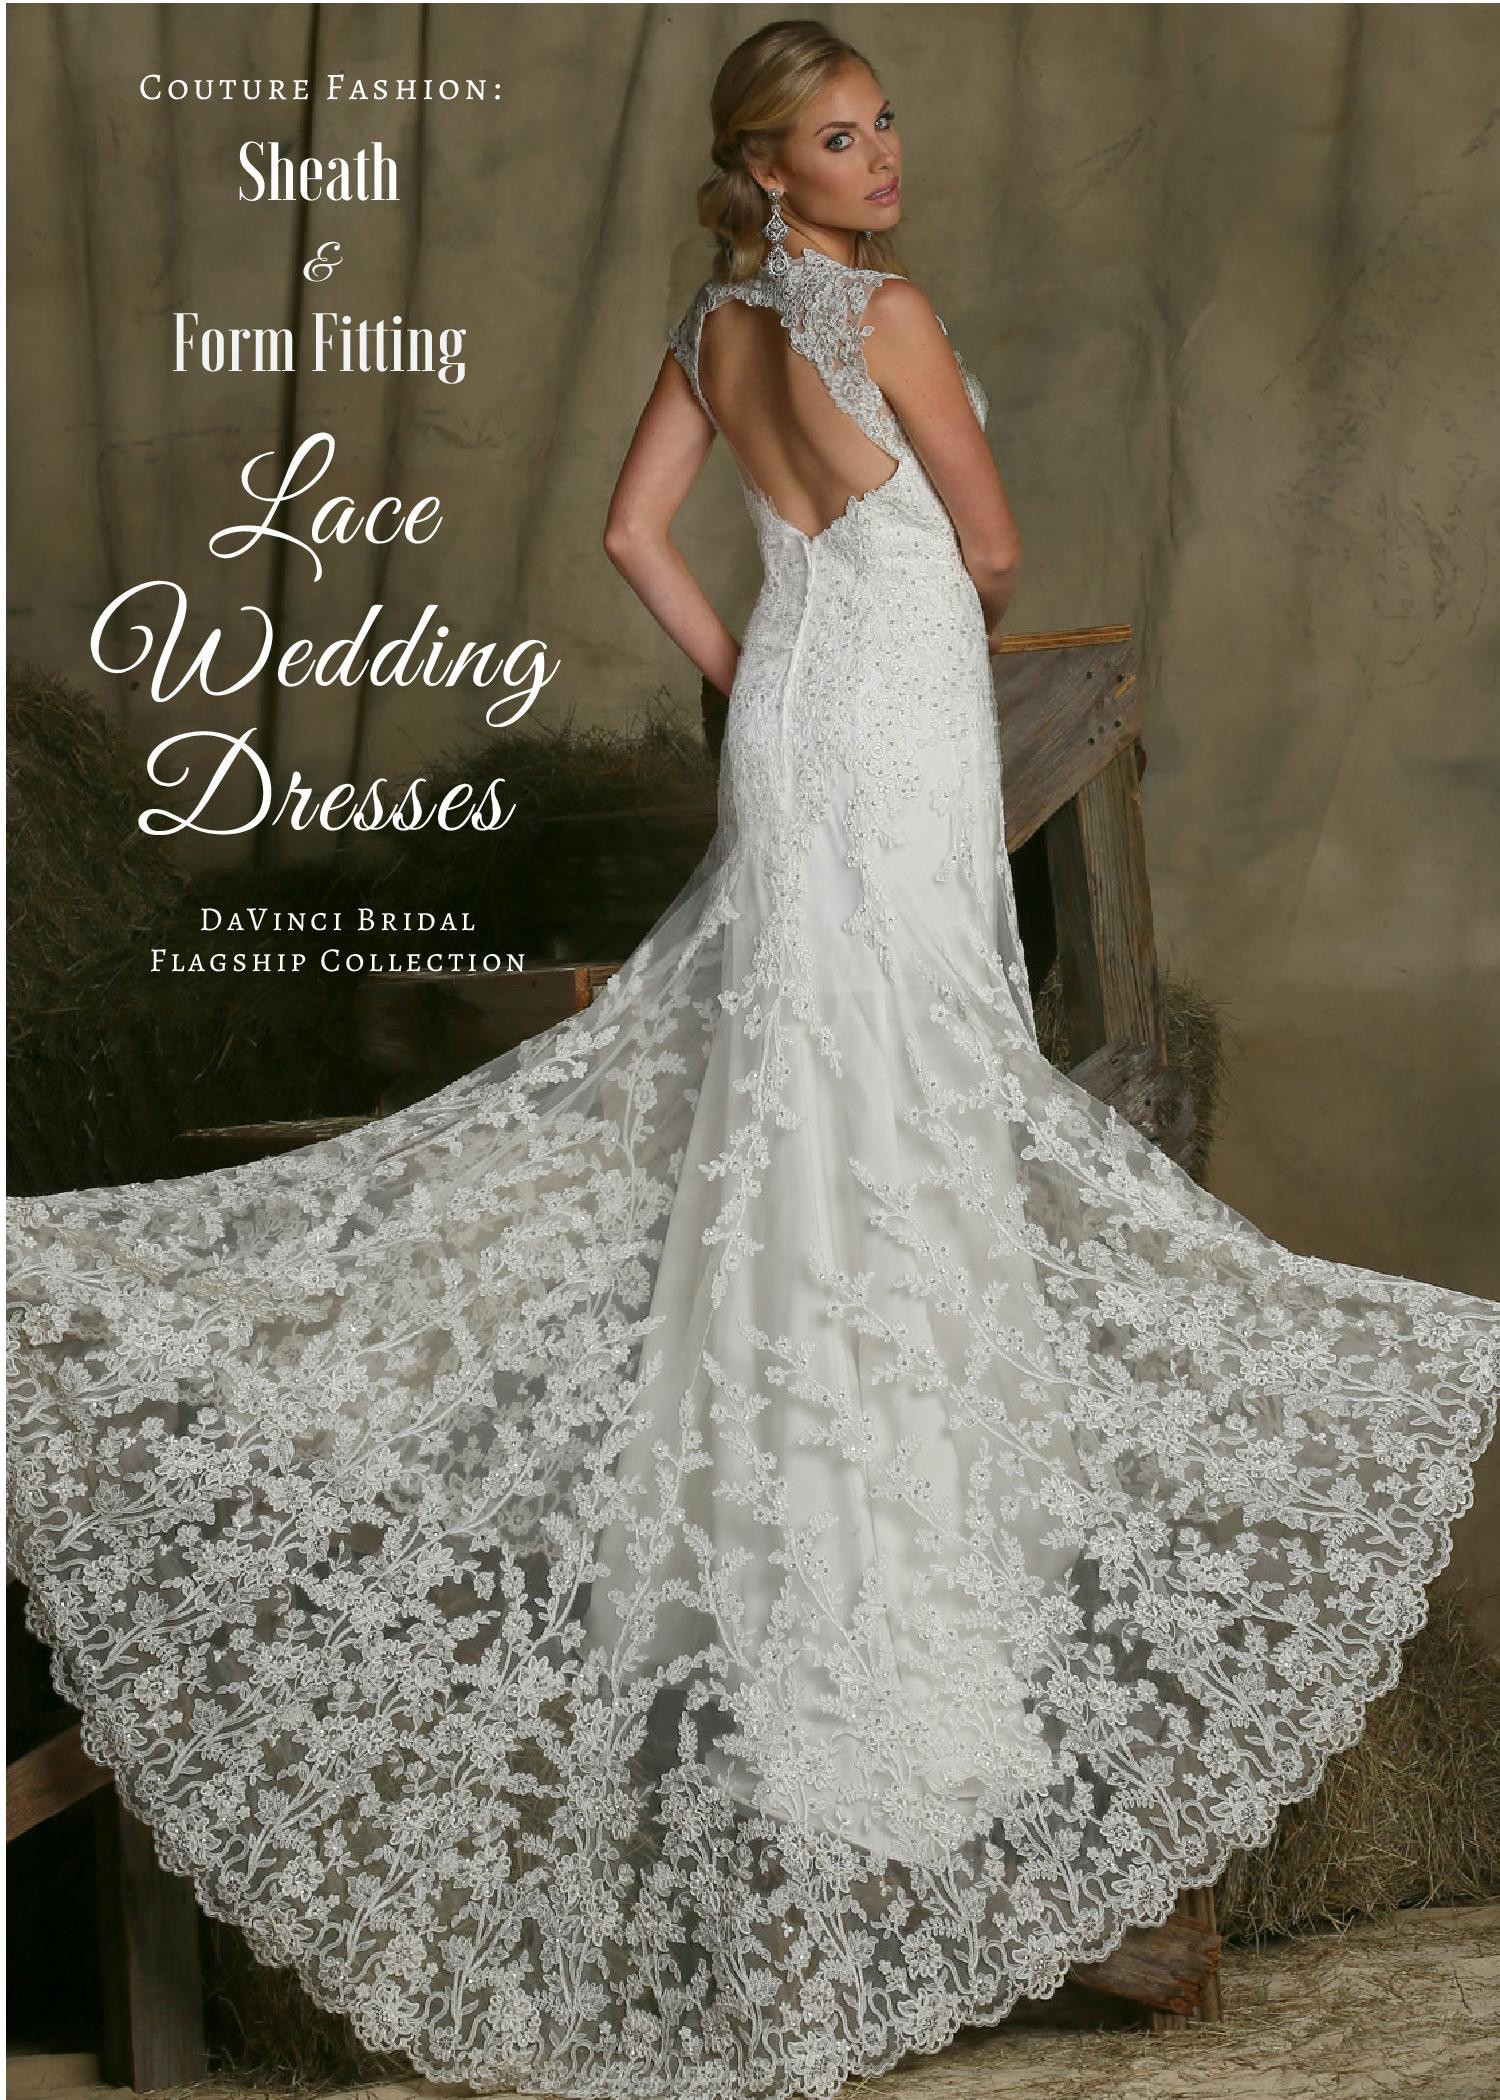 Form Fitting Wedding Dress
 Sheath & Form Fitting Lace Wedding Dresses – DaVinci